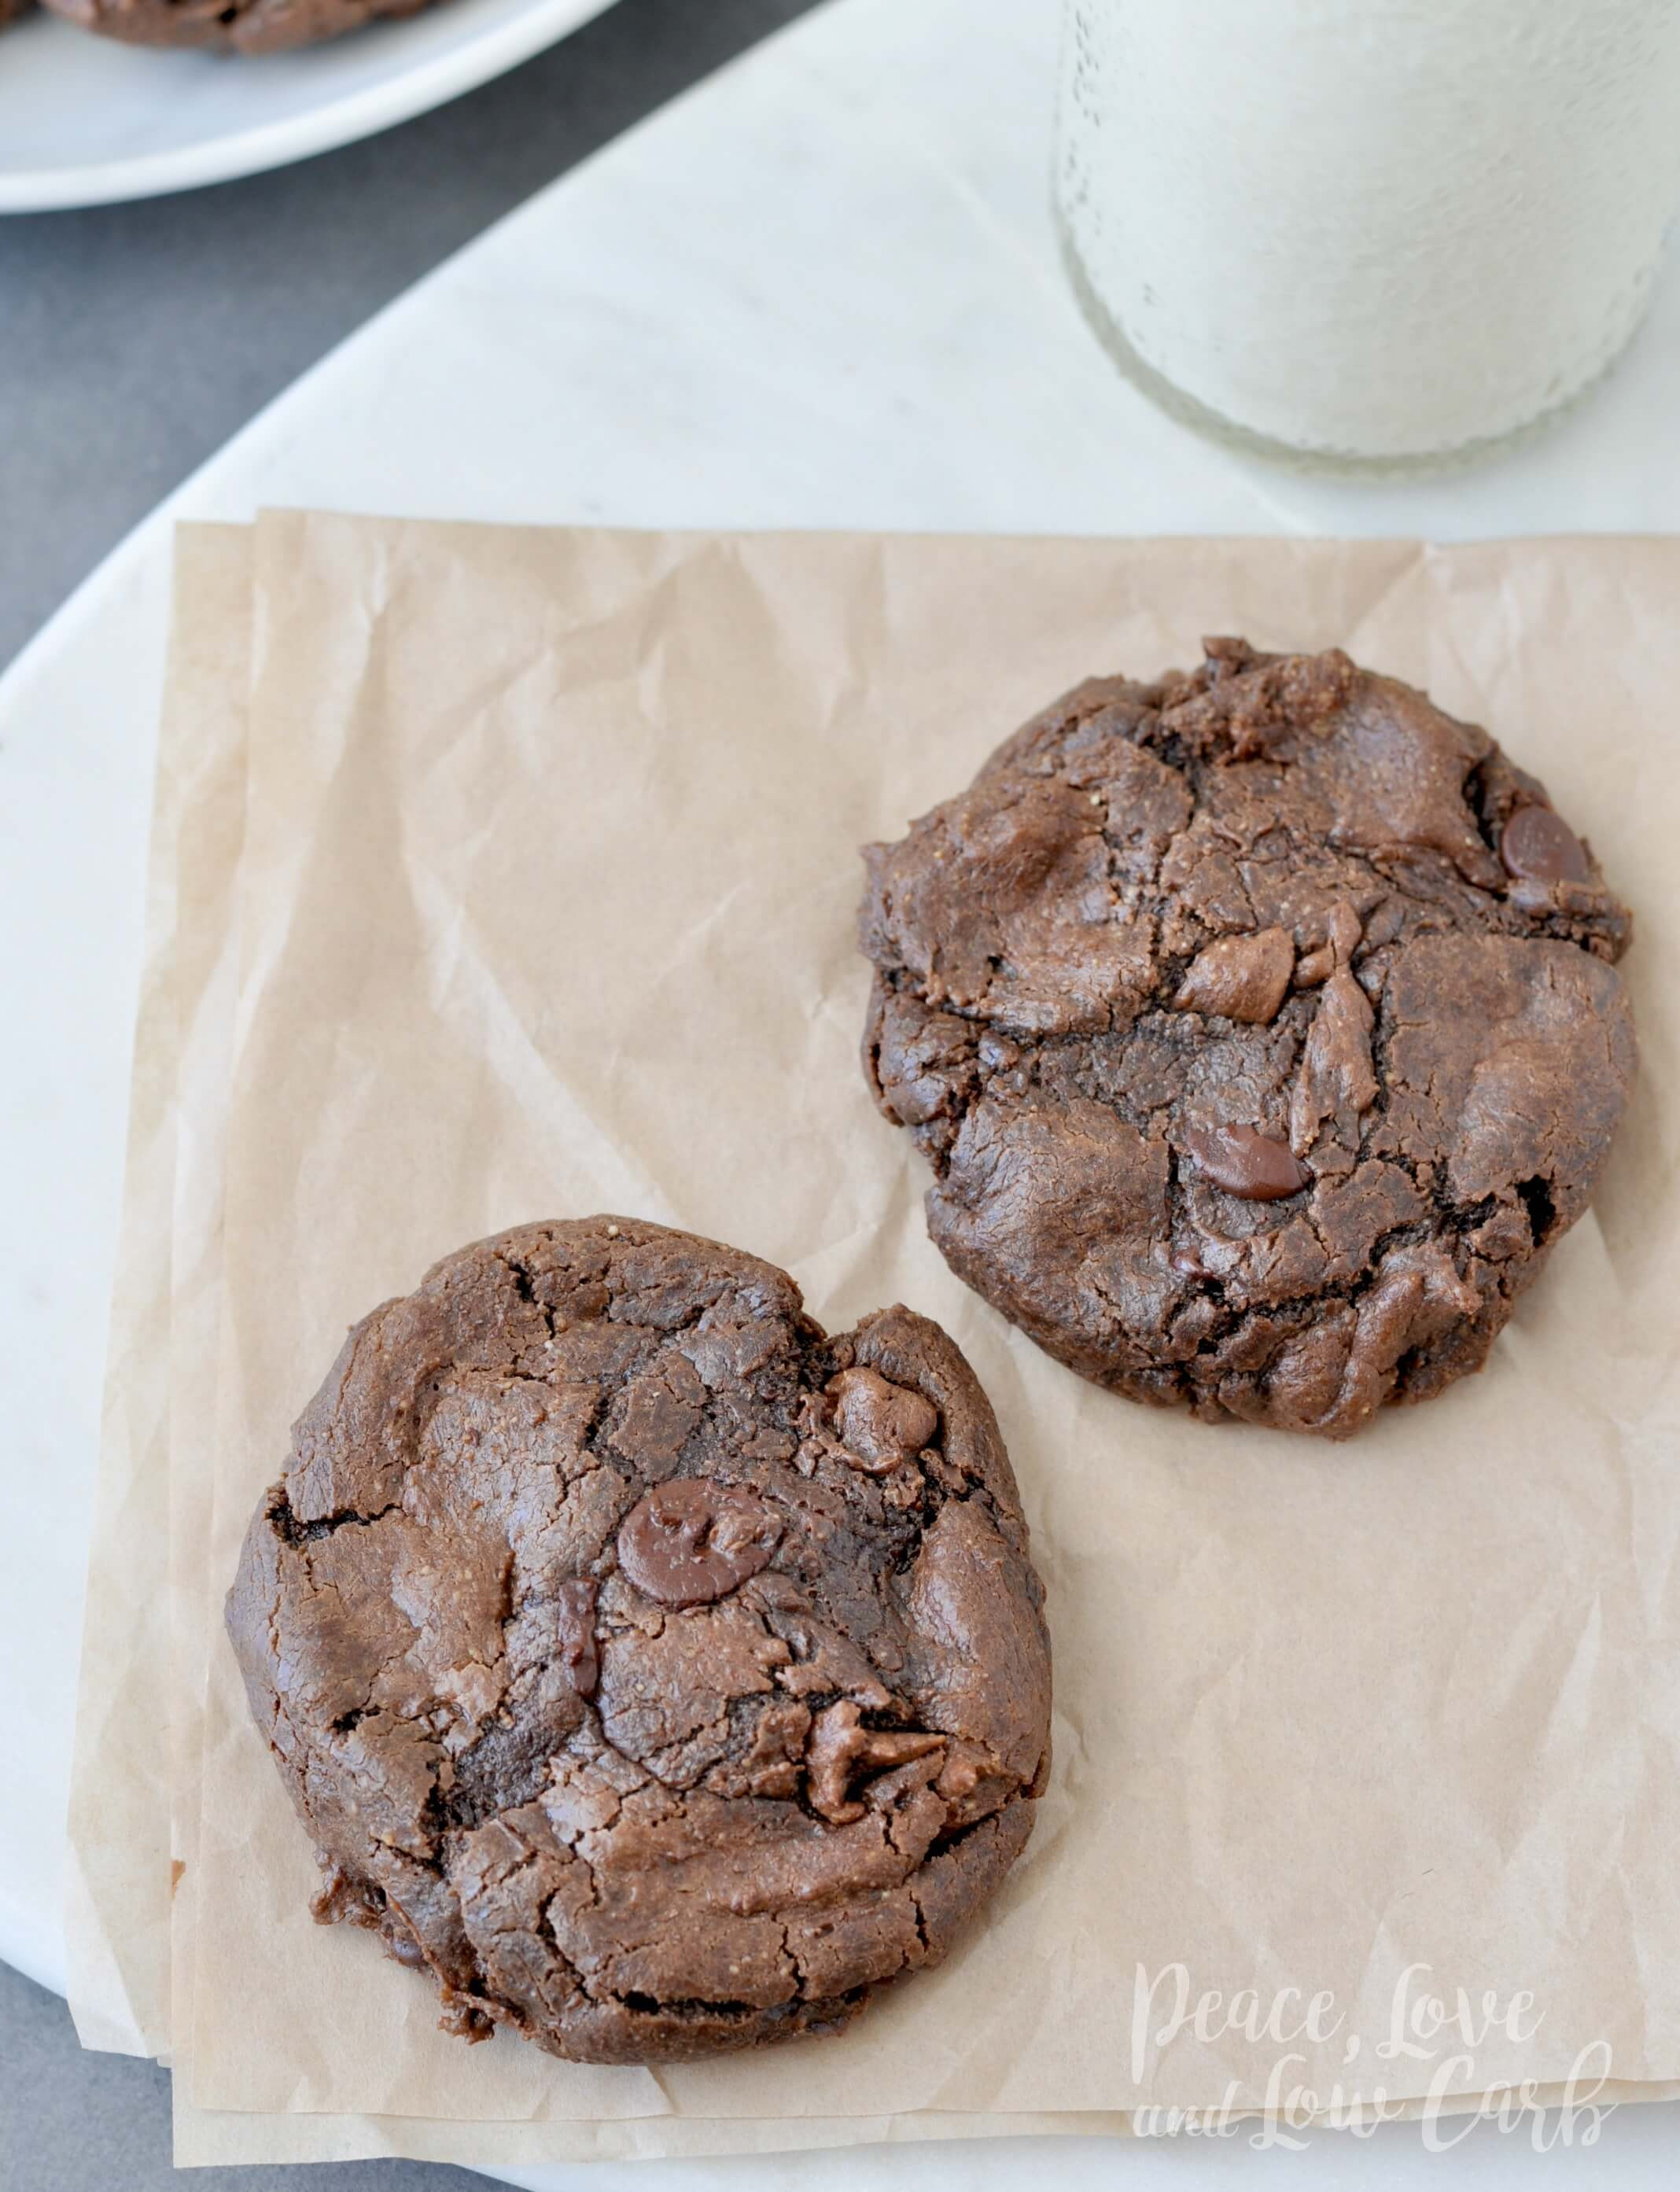 Chewy Keto Chocolate Chip Cookies
 Keto Flourless Chewy Double Chocolate Chip Cookies